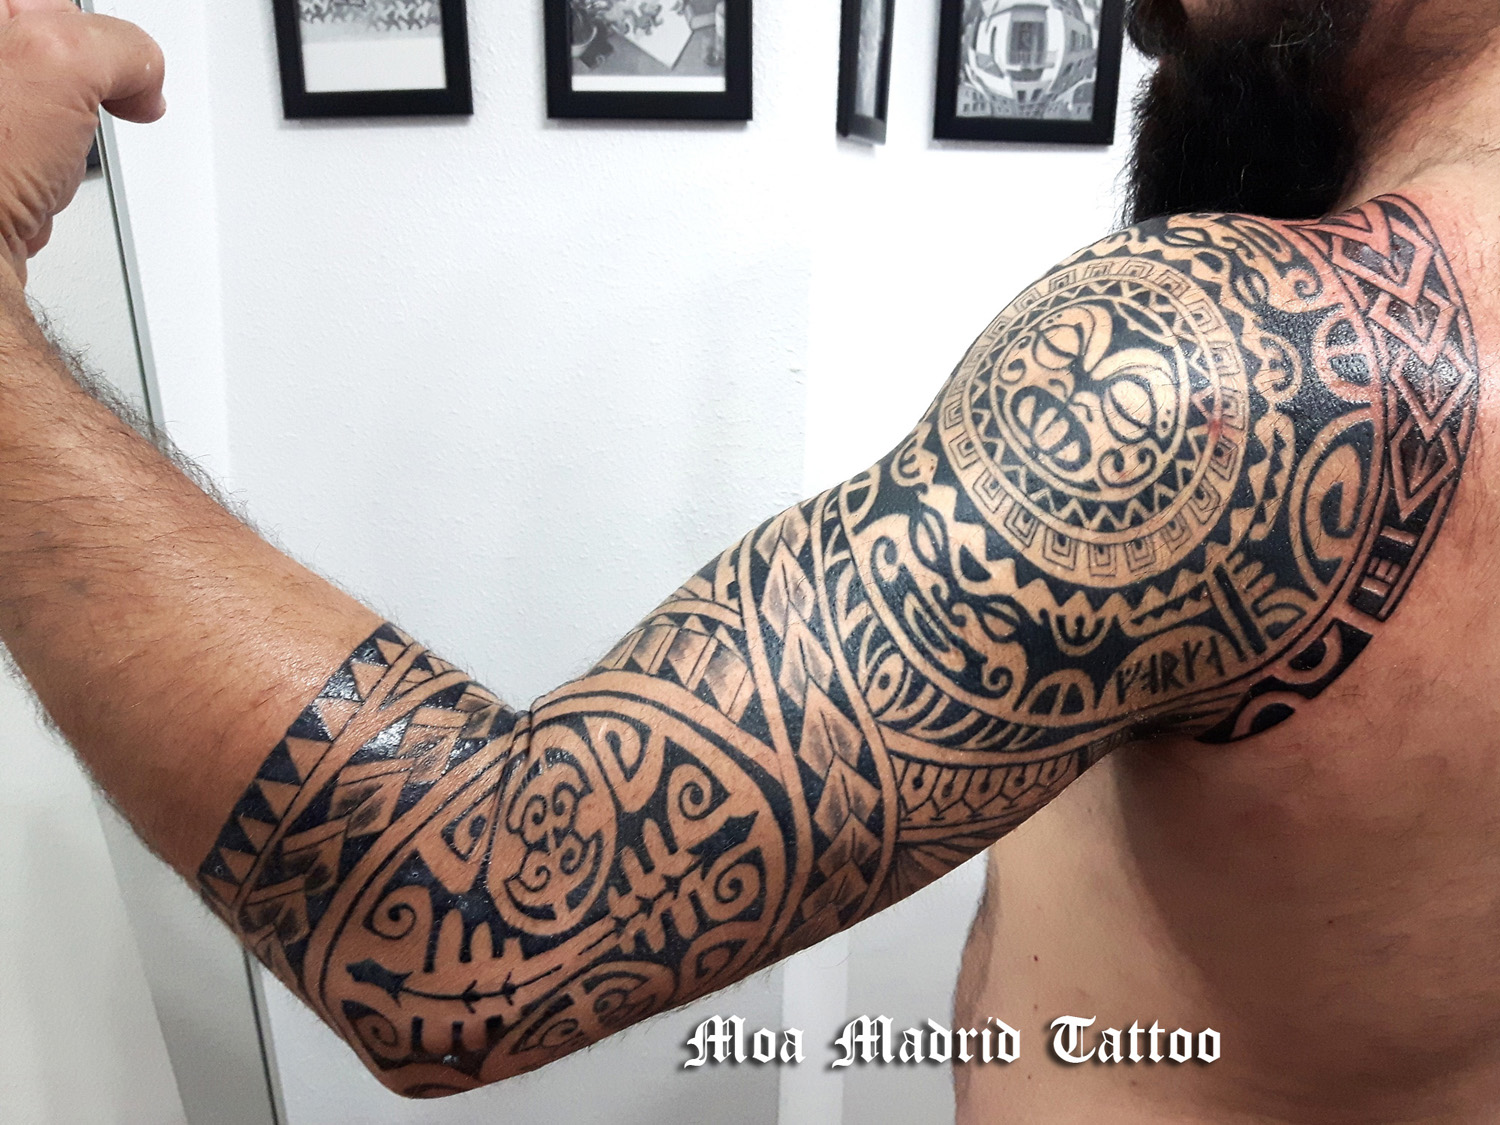 ¿Dónde tatuarse un brazo maorí en Madrid? En Moa Madrid Tattoo